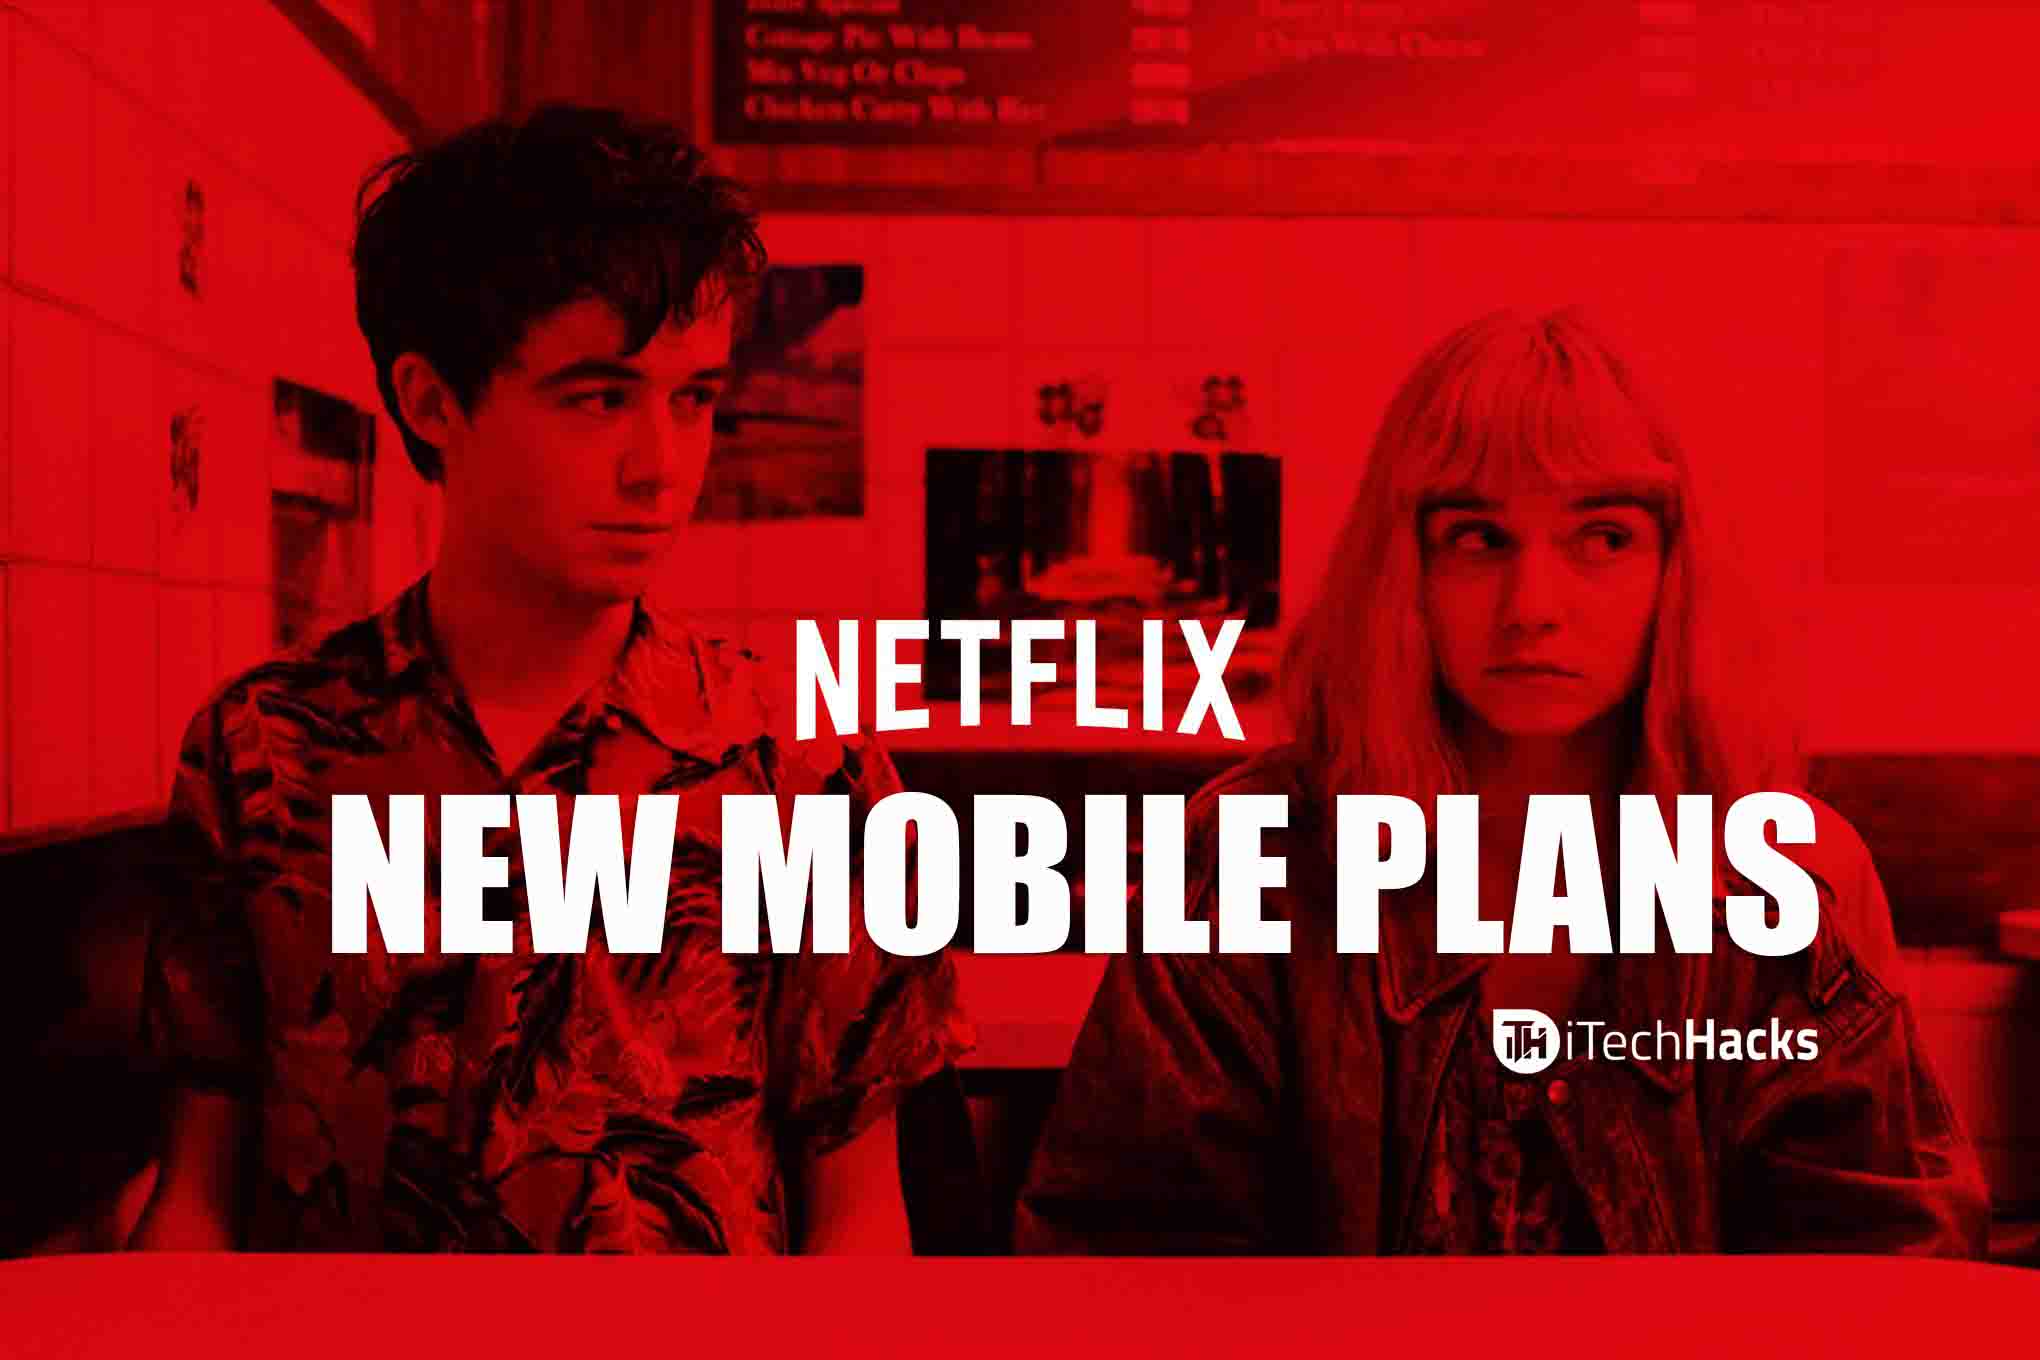 Netflix New Mobile Plans and Free Netflix Accounts 2019